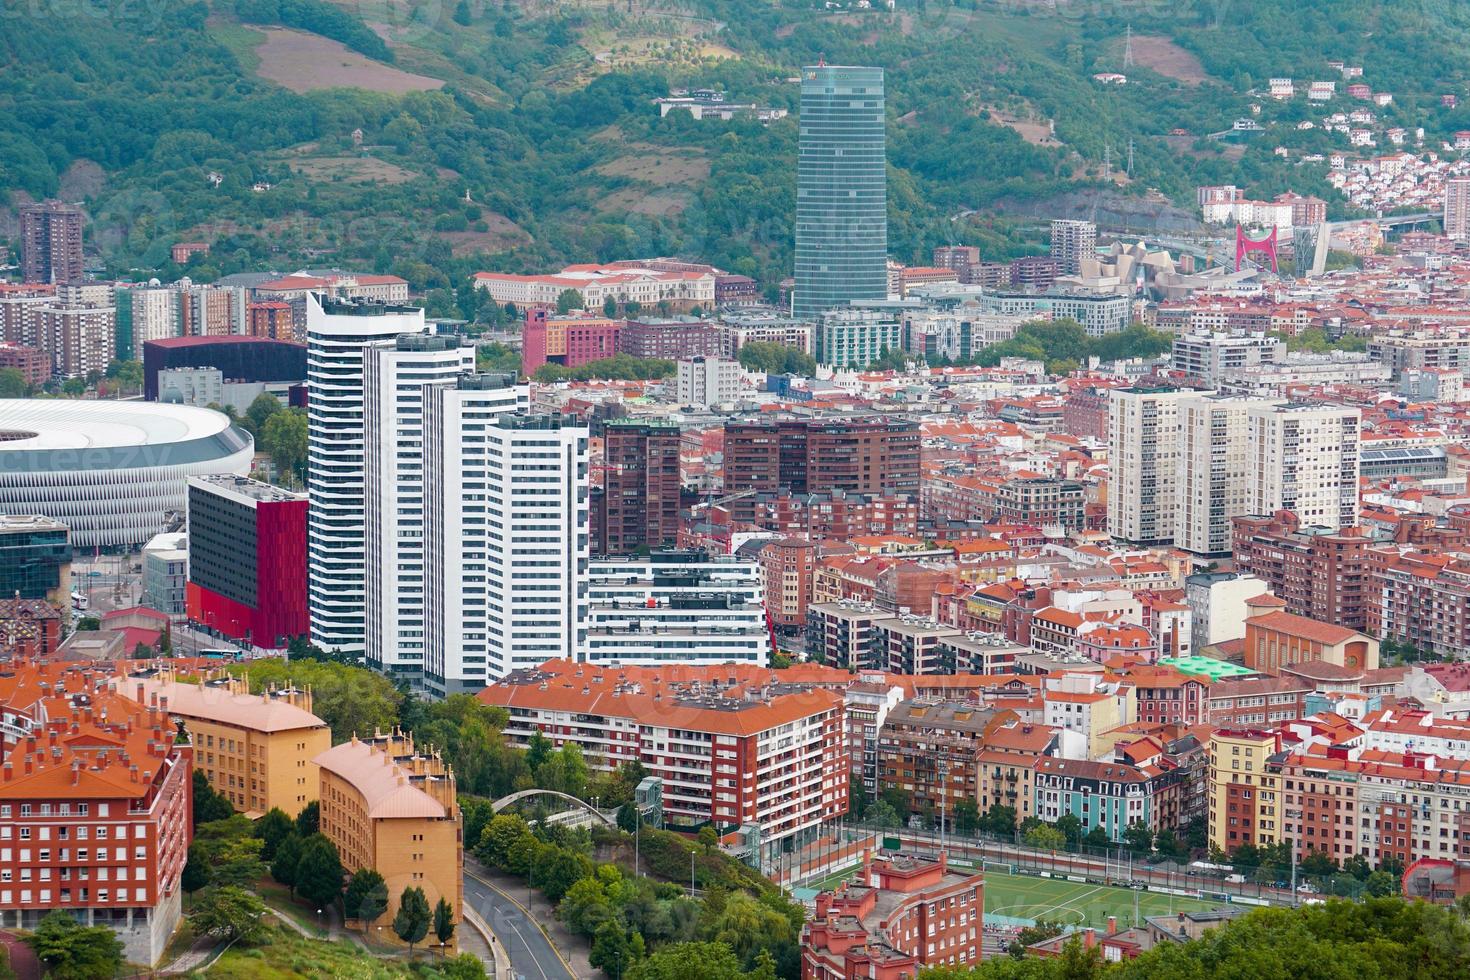 stadsgezicht van bilbao stad, baskenland, spanje, reisbestemmingen foto